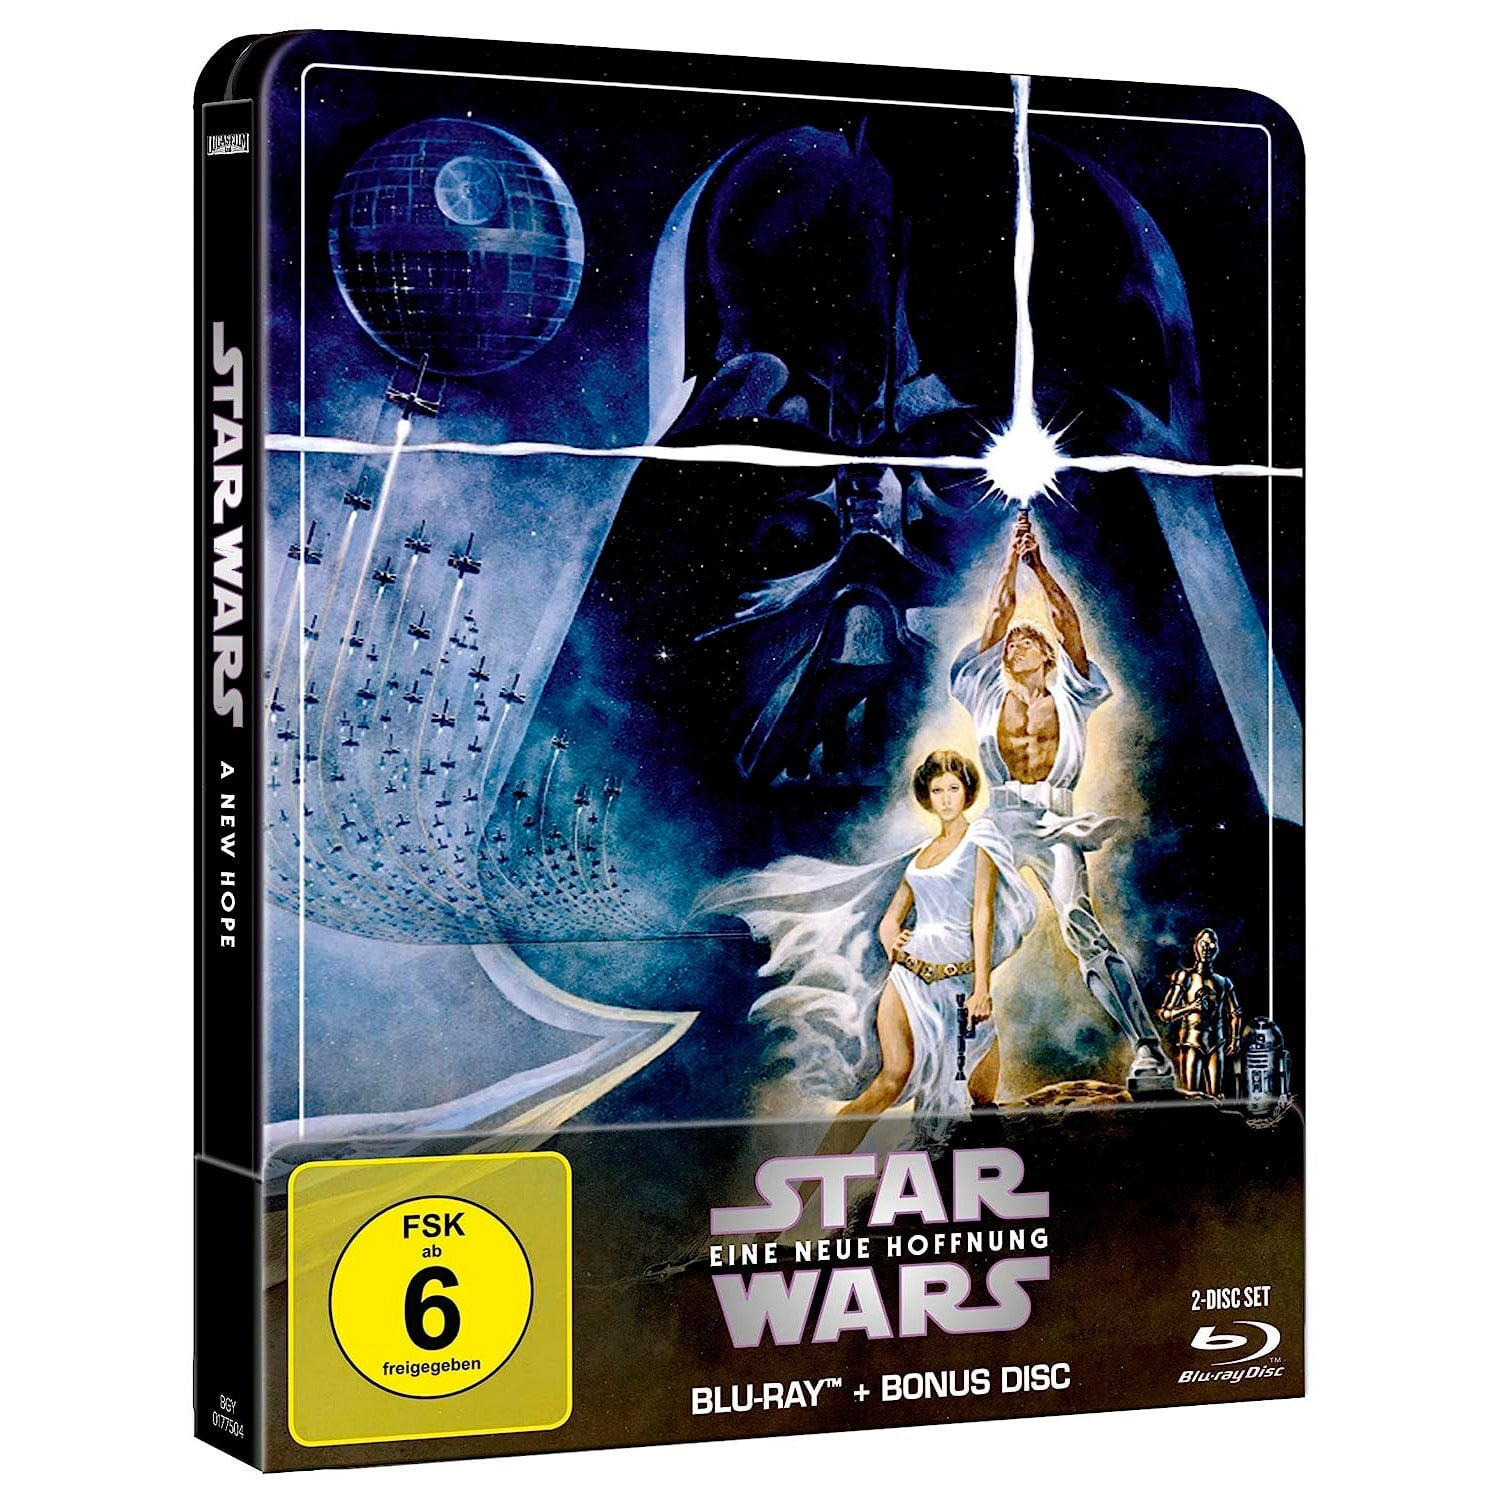 Звёздные войны: Эпизод IV – Новая надежда (англ. язык) (Blu-ray + Бонусный диск) Steelbook